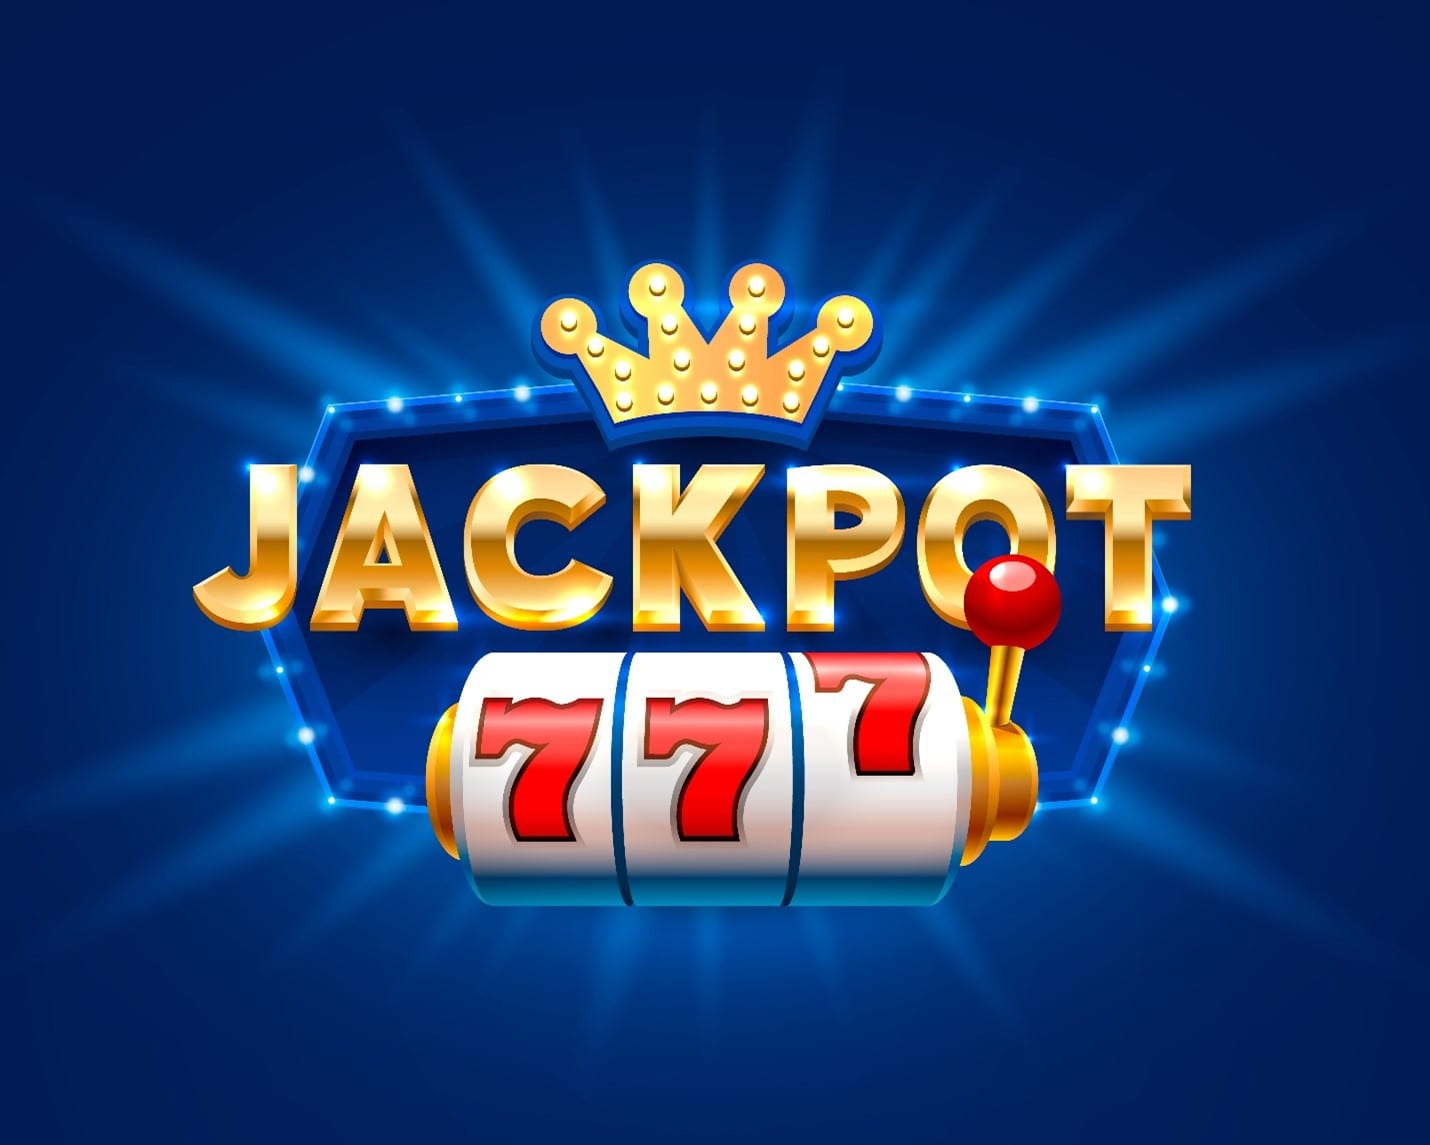 Ty le thuong Jackpot tai Slot game